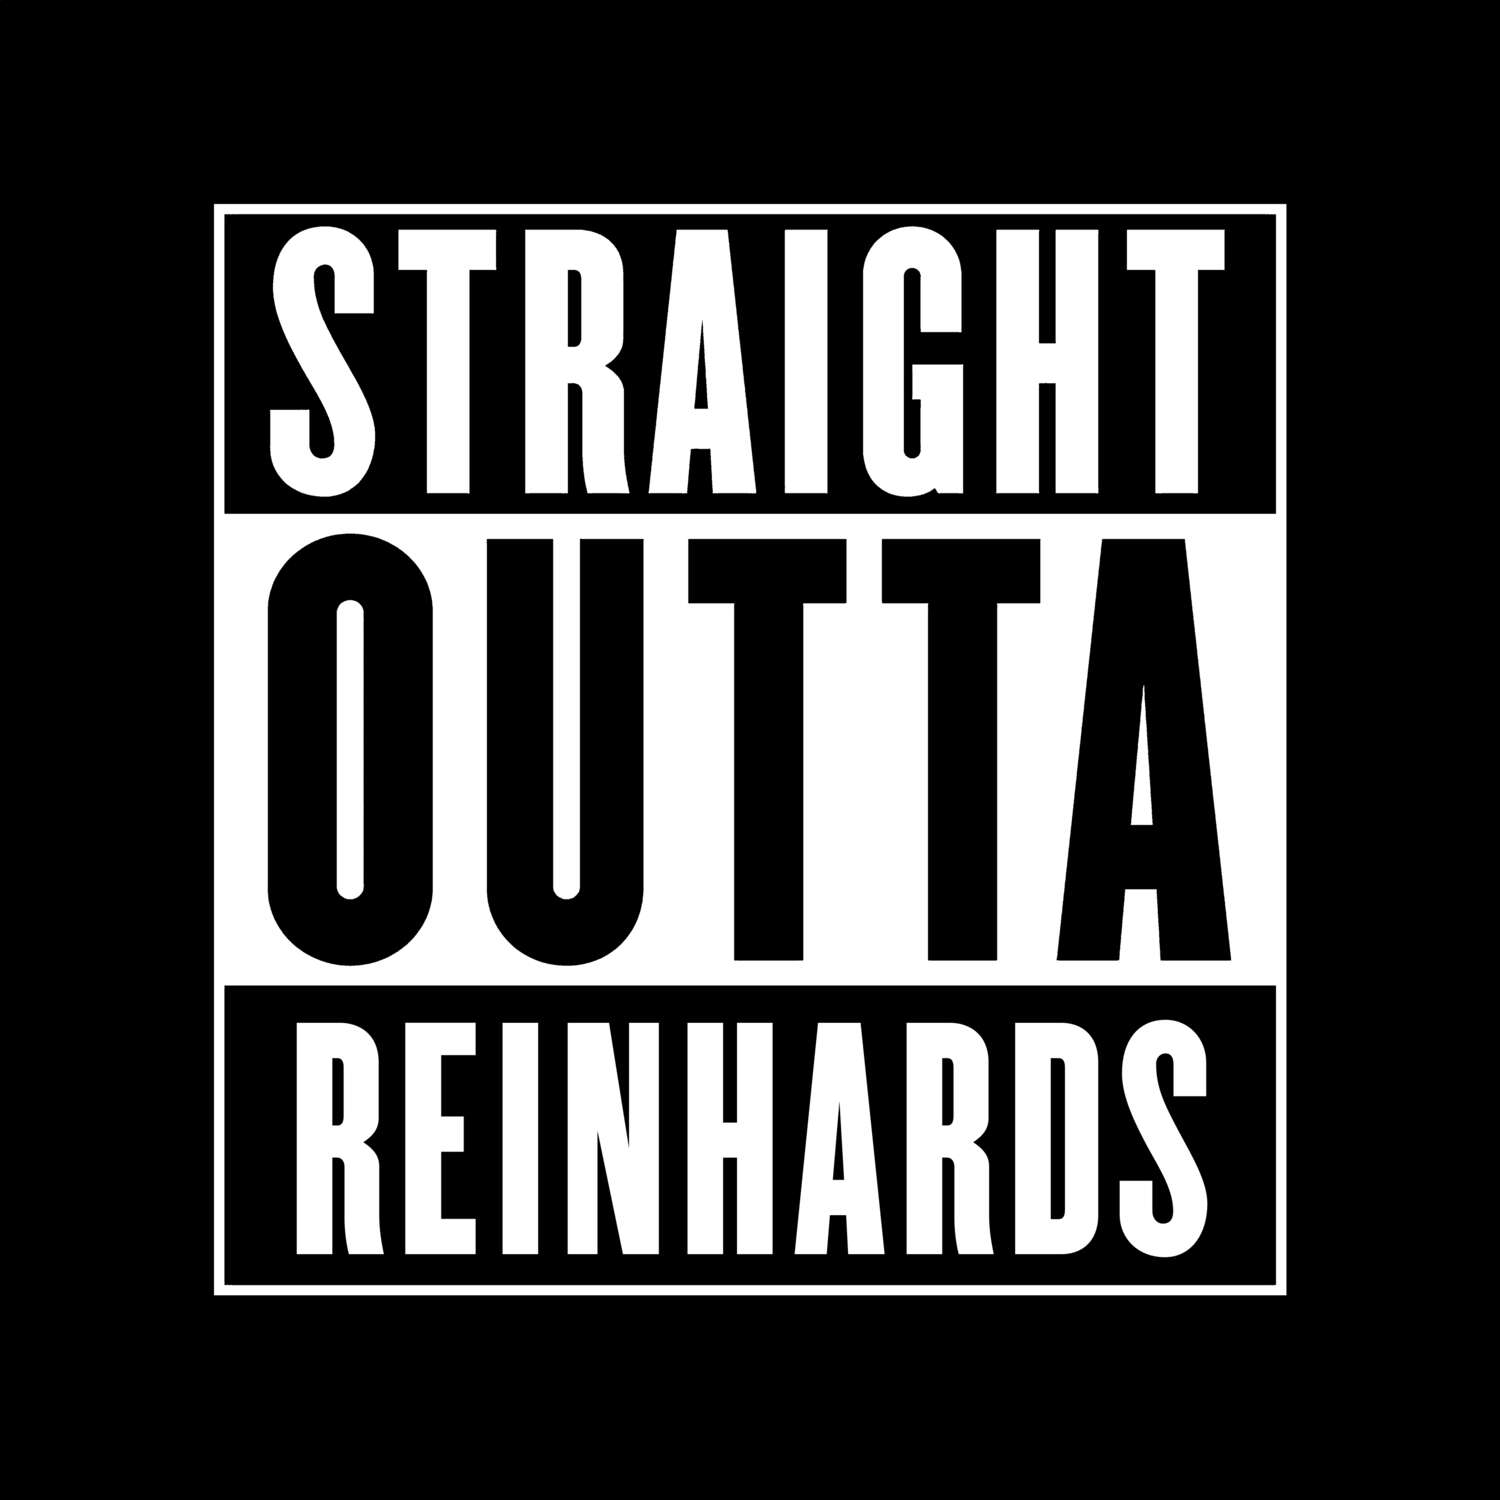 Reinhards T-Shirt »Straight Outta«